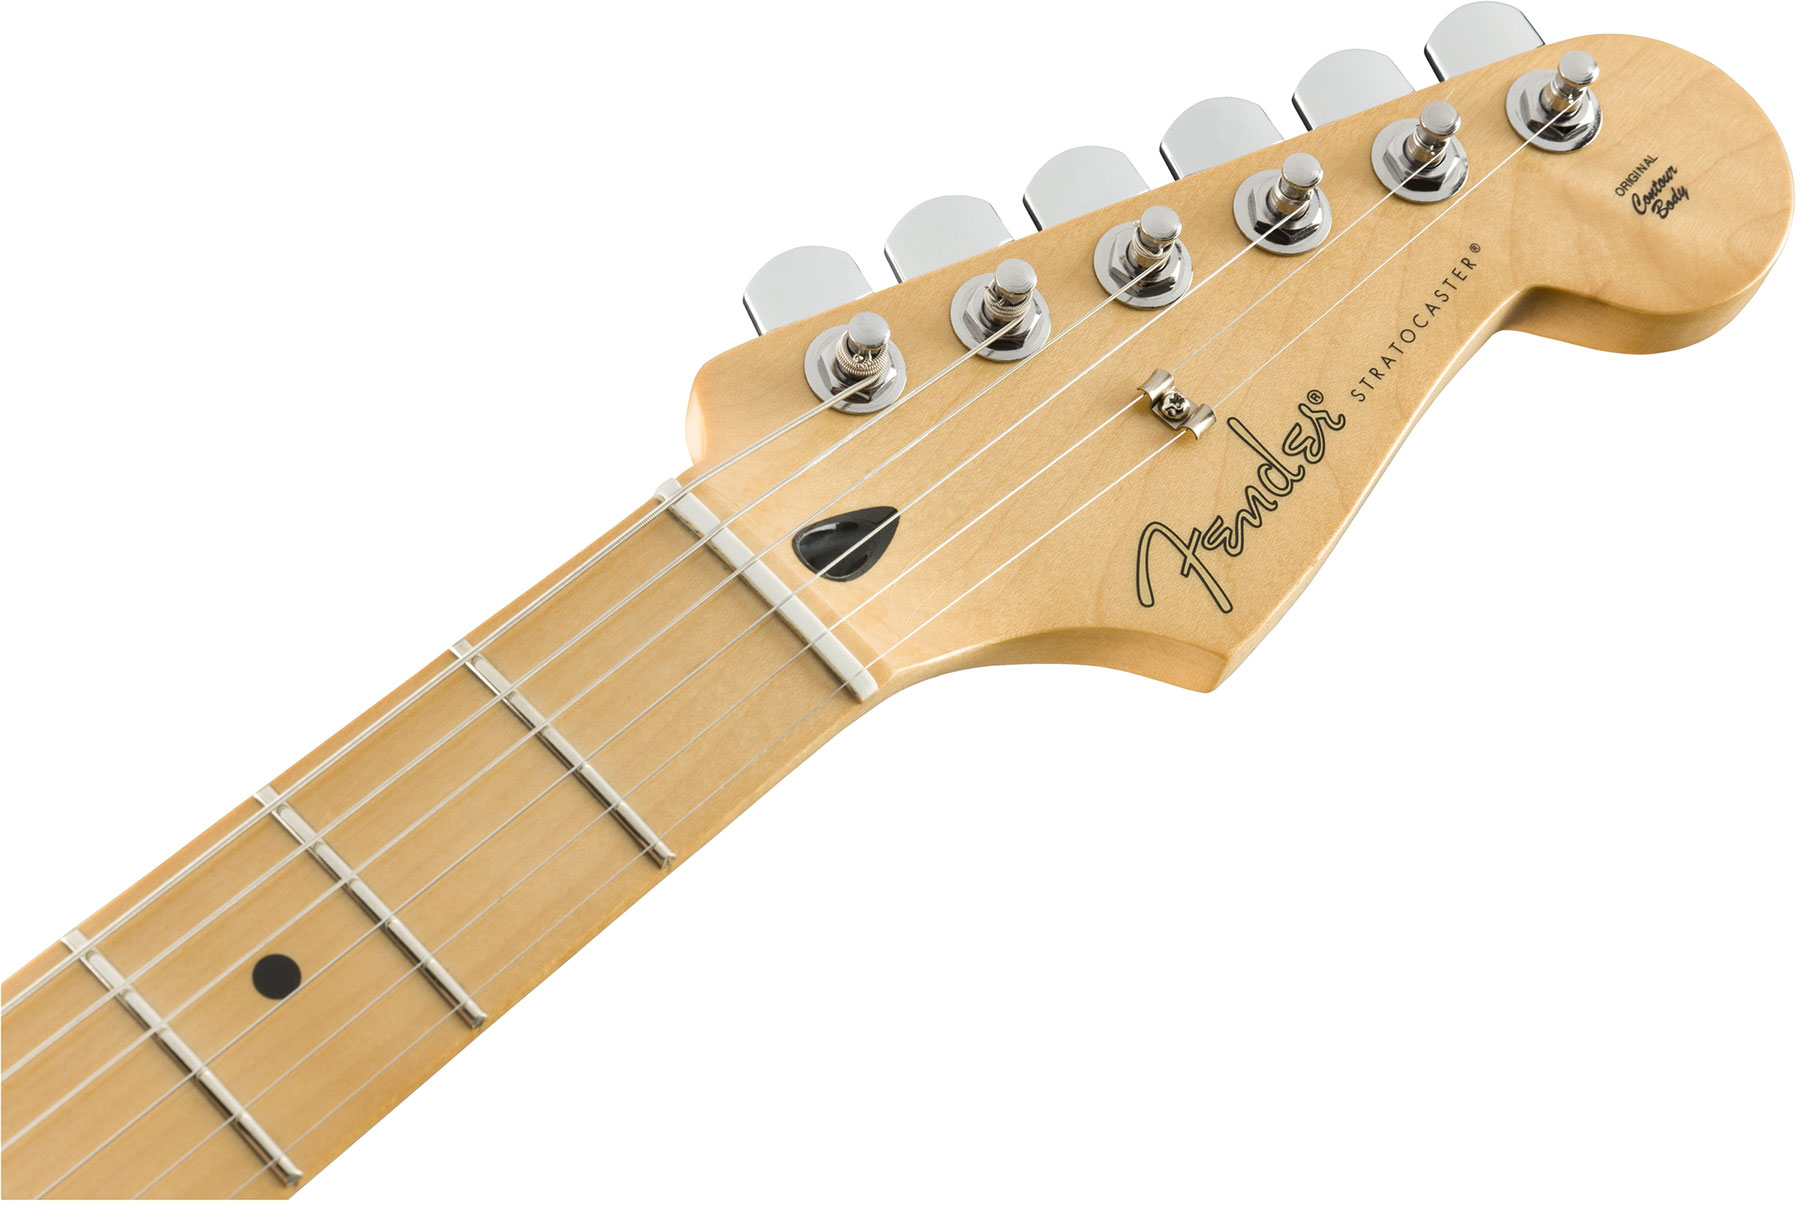 Fender Strat Player Mex Sss Mn - Polar White - Str shape electric guitar - Variation 3